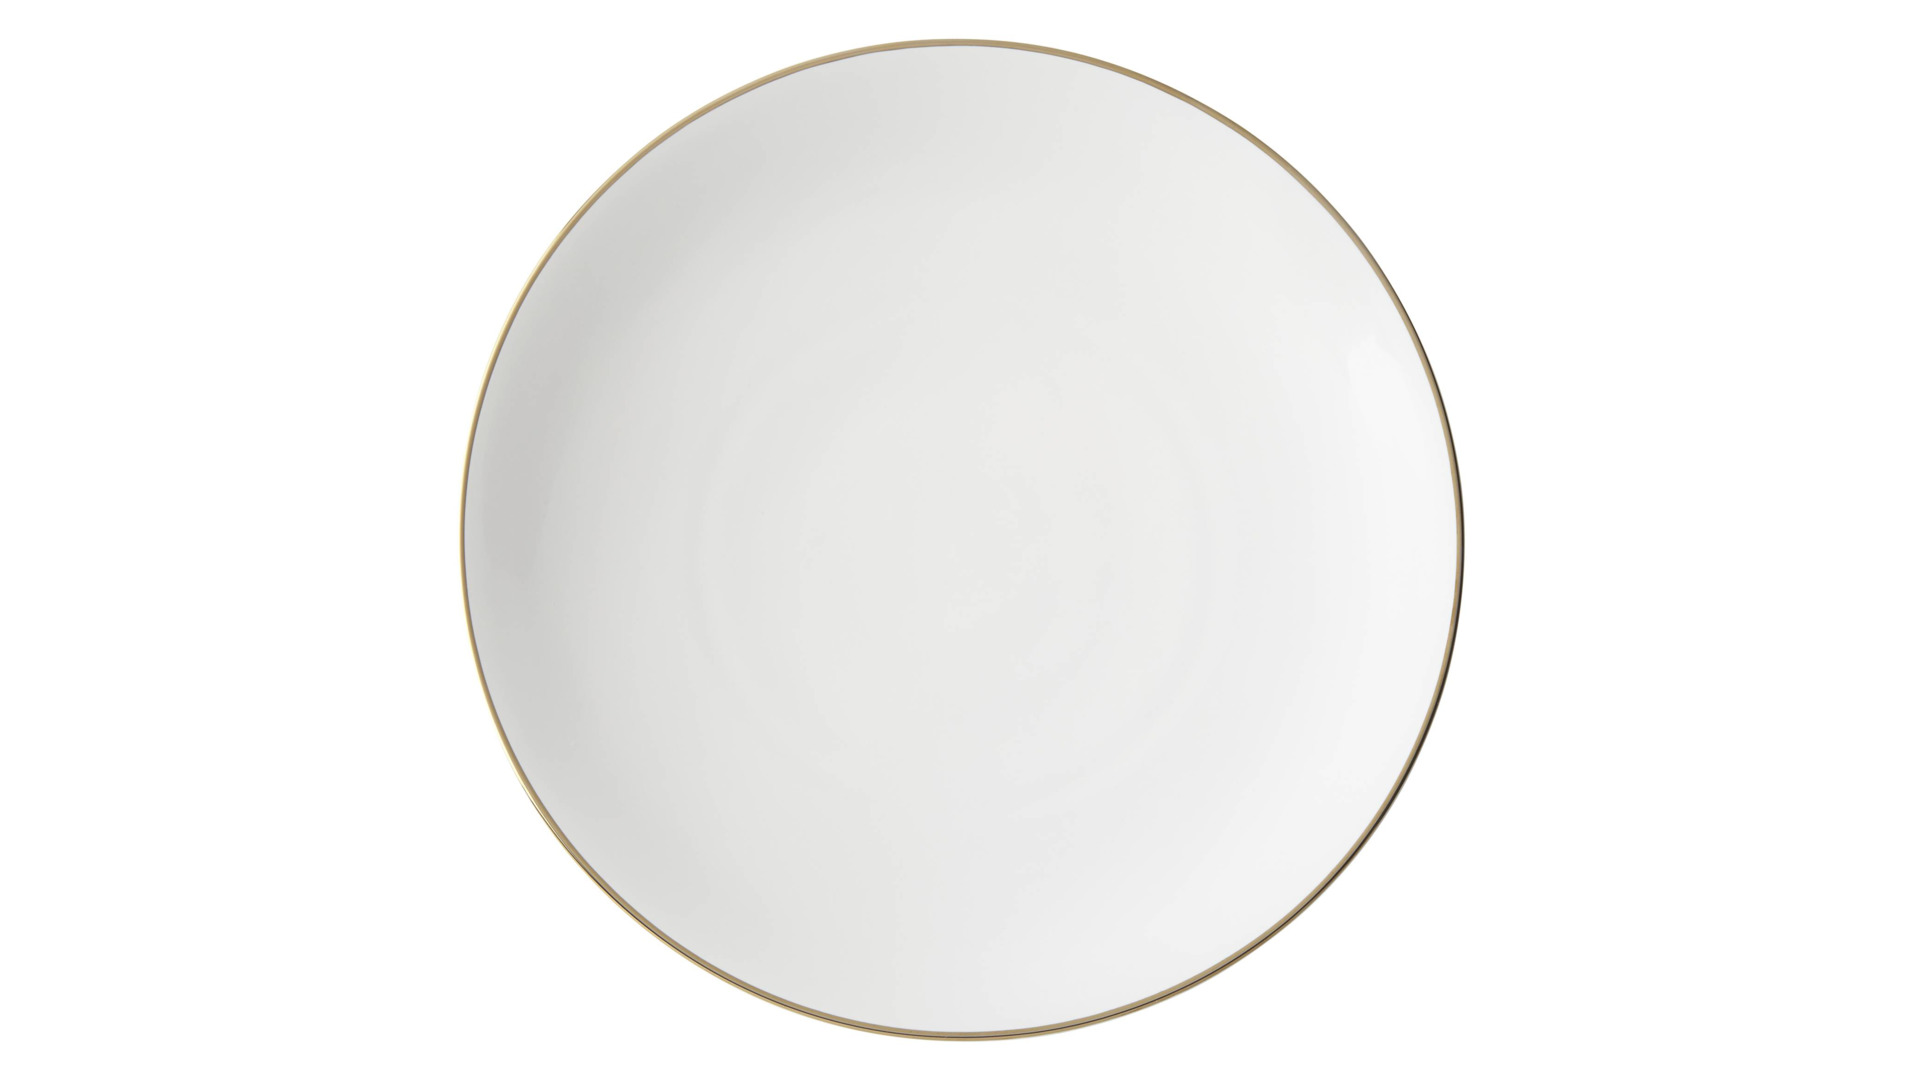 Тарелка обеденная Lenox Трианна 28 см белая